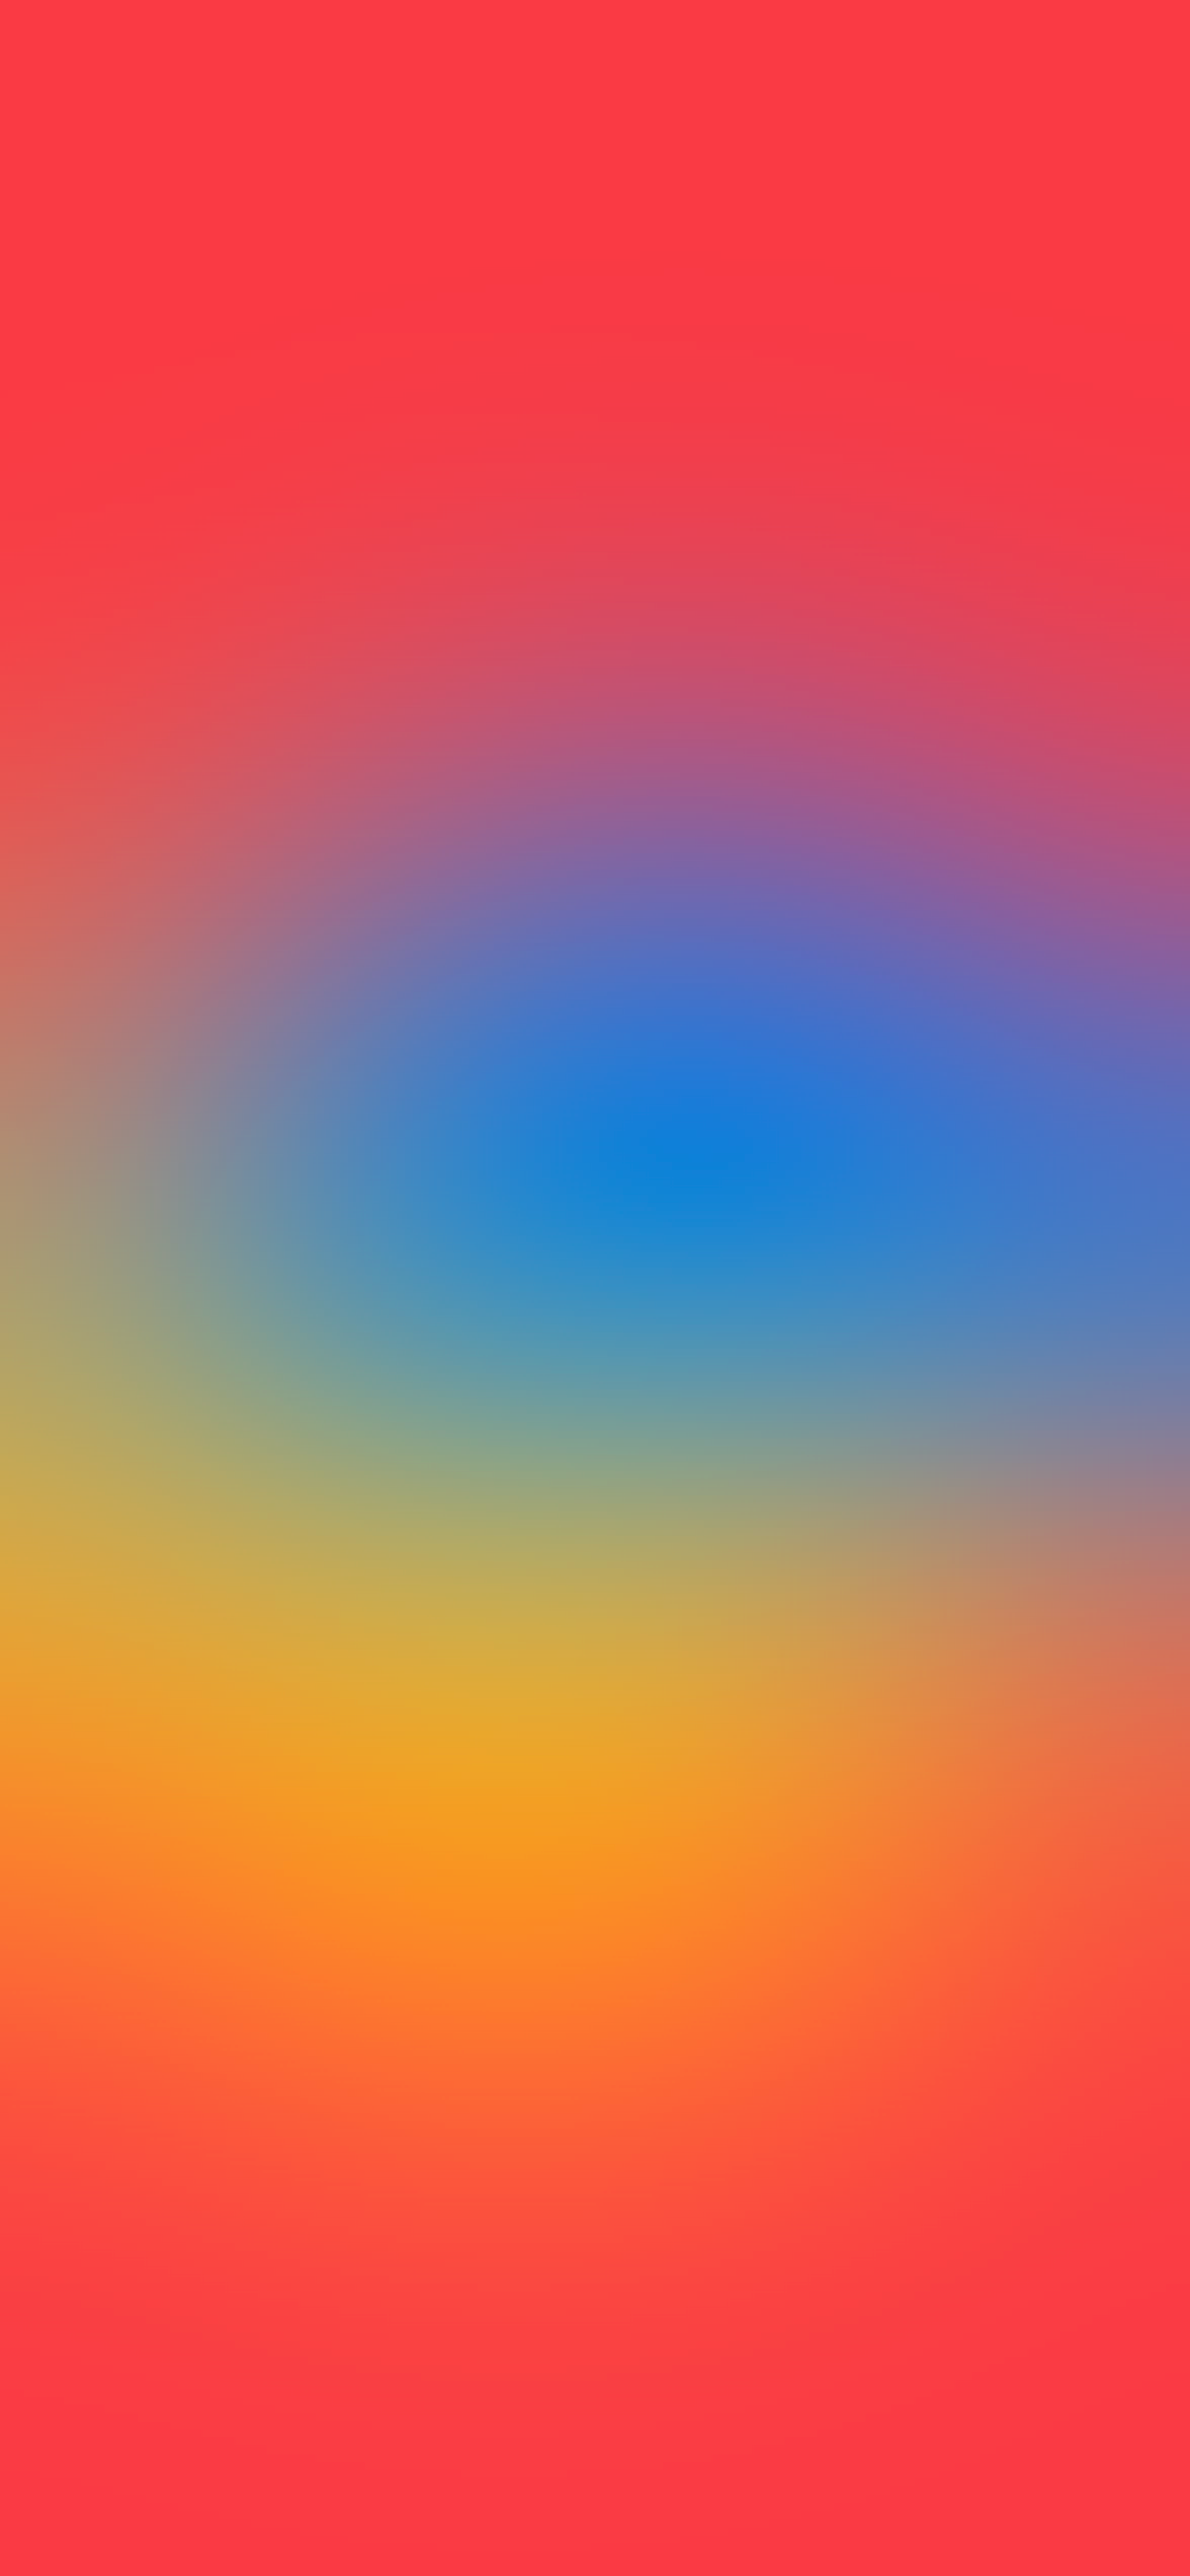 iOS blurred wallpaper